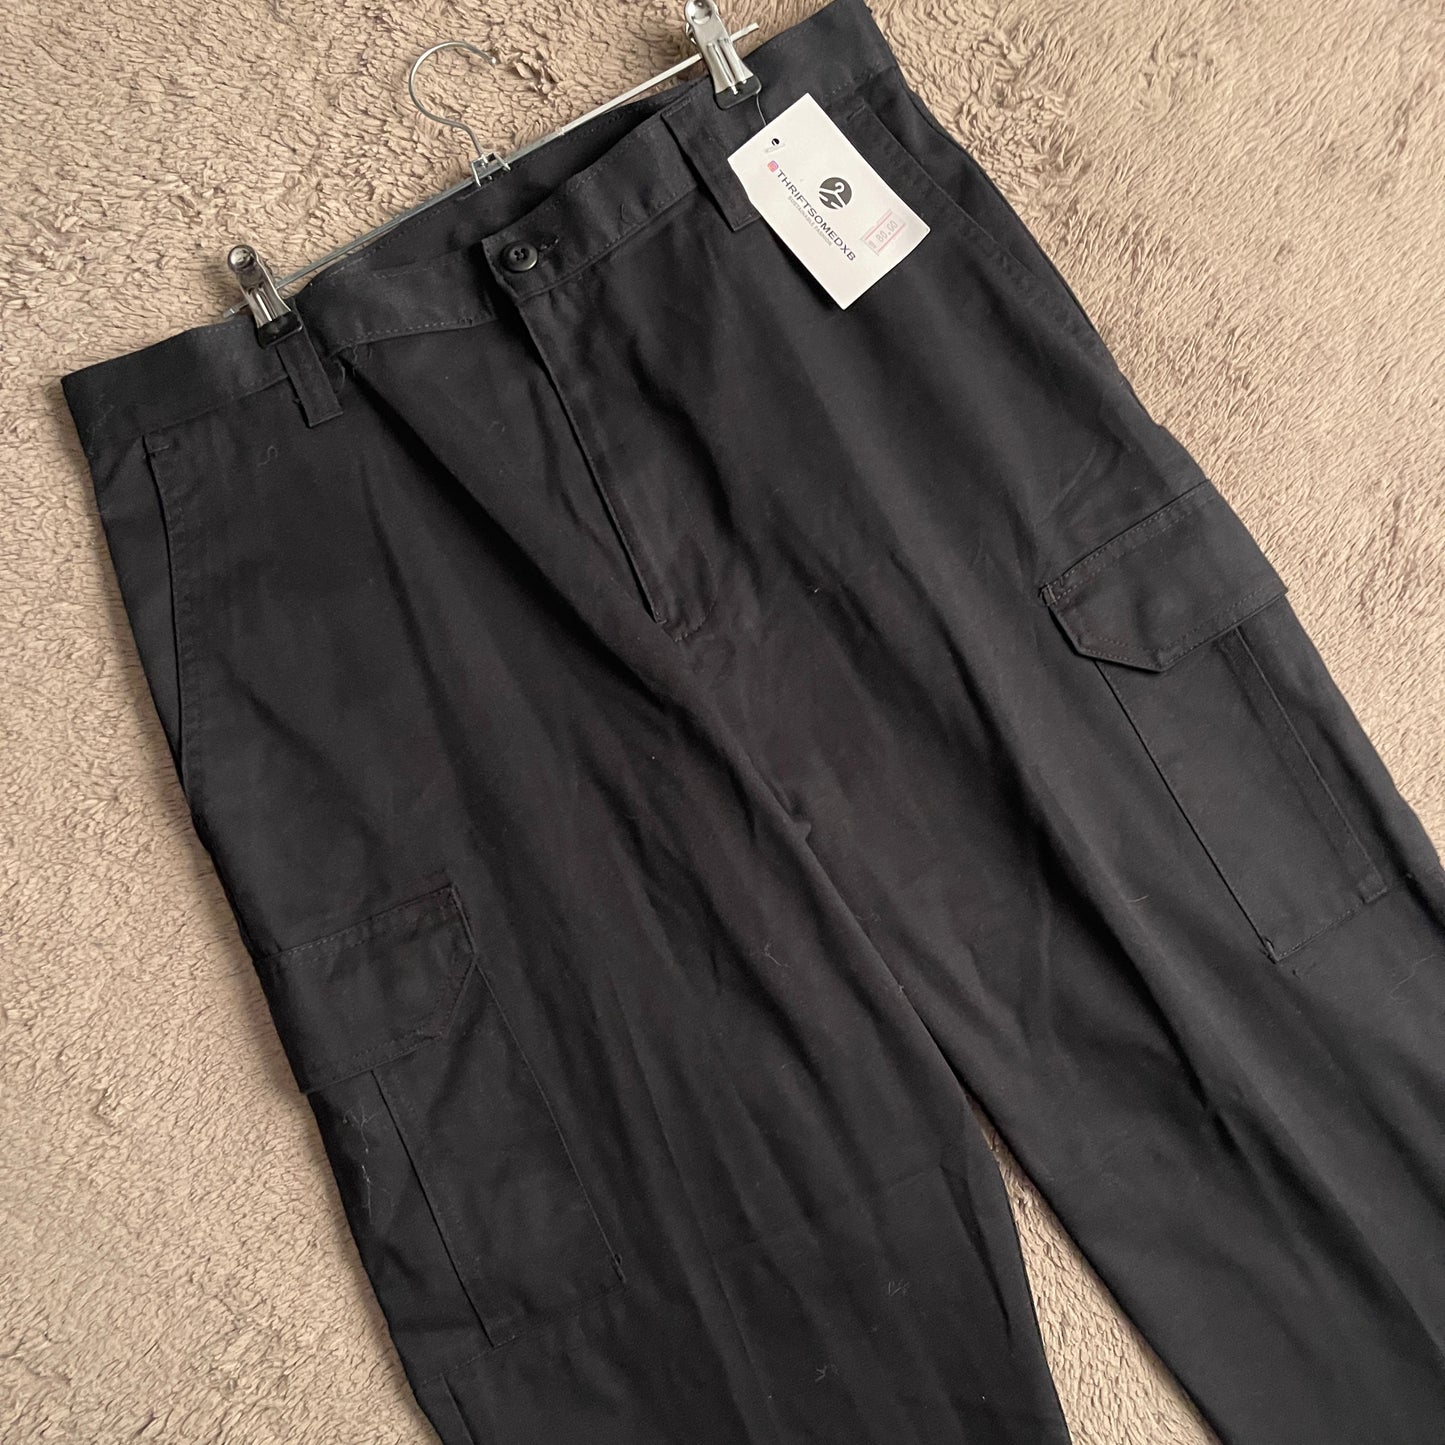 Cintas Black Cargo Pants (W33/L40)